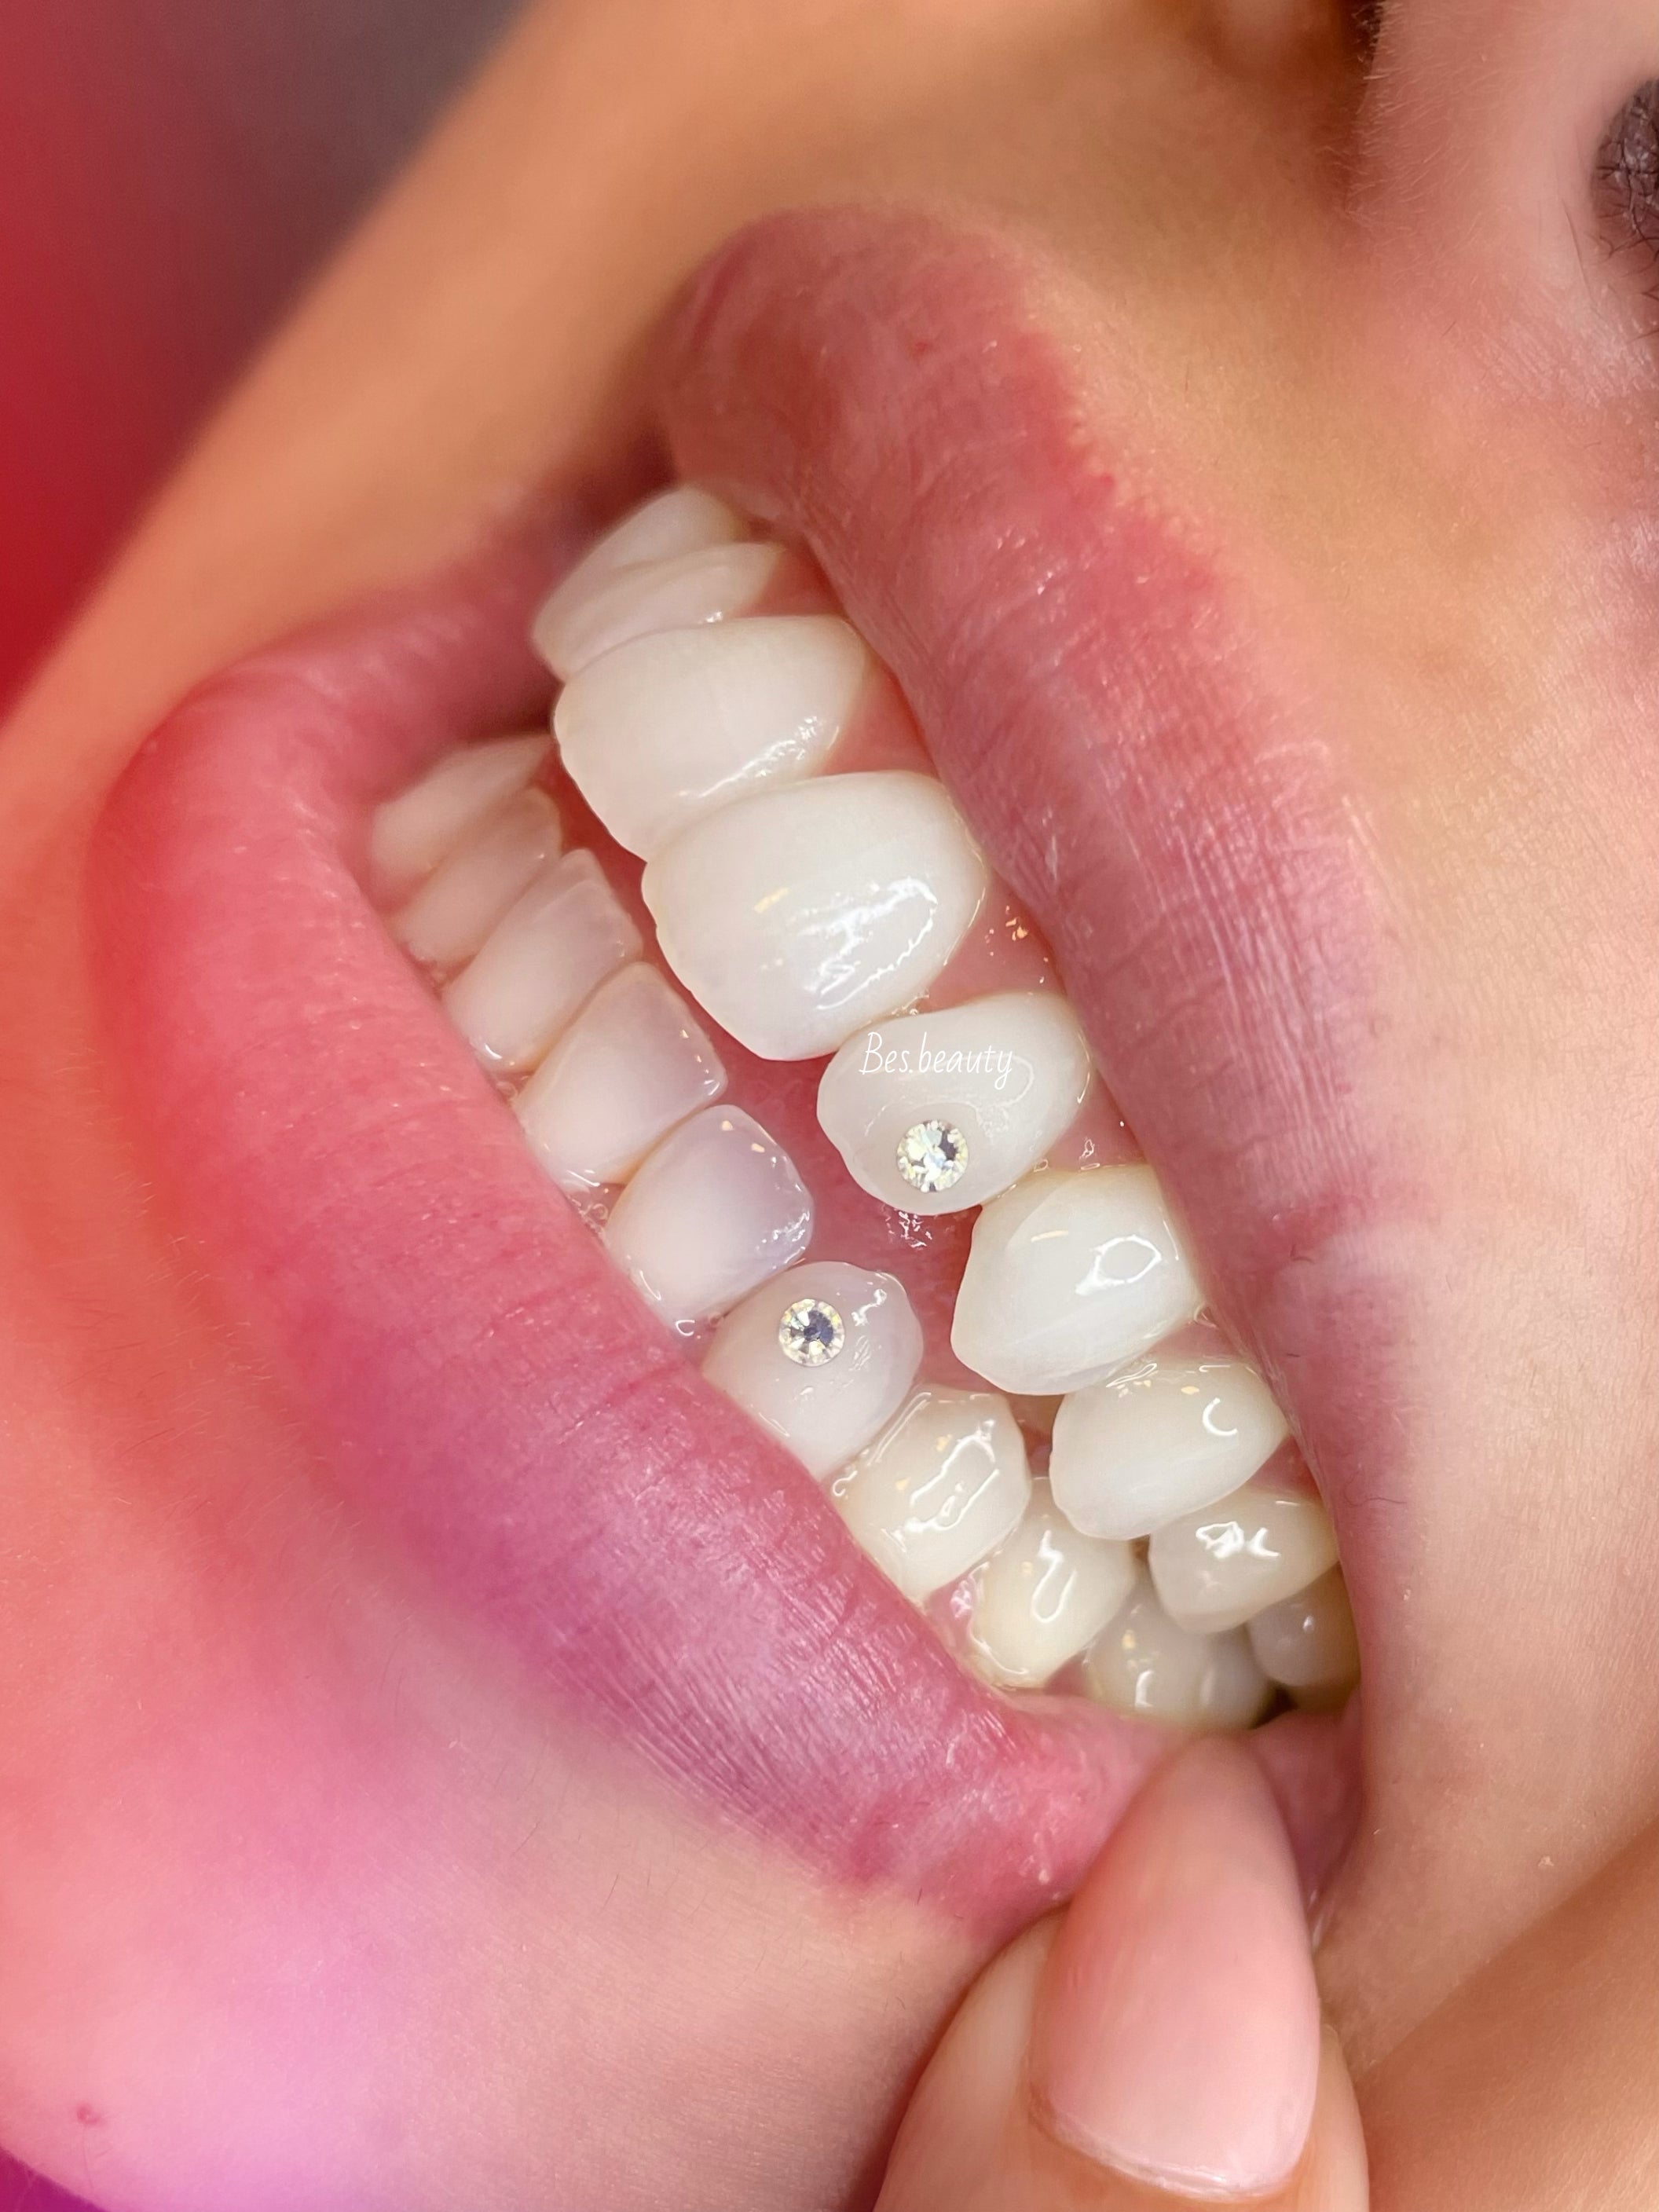 Teeth Whitening + Tooth Gem 💎 - Belle Beauty Academy